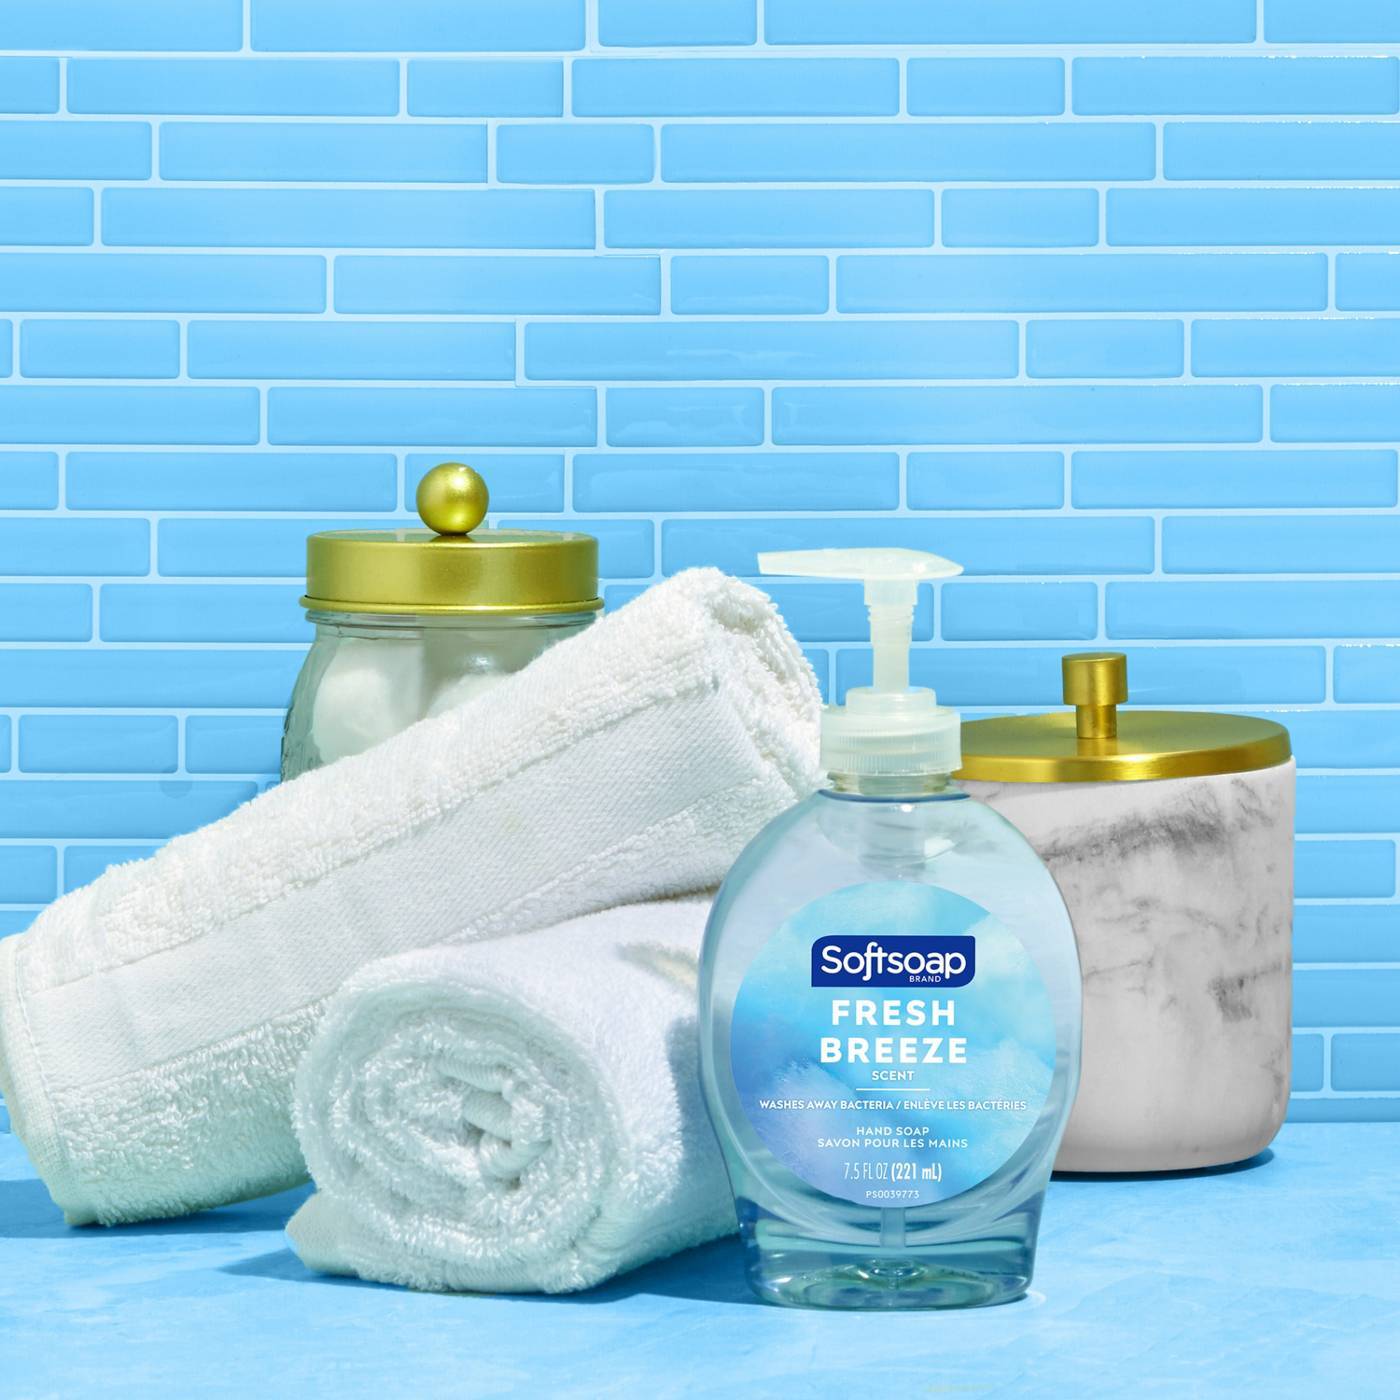 Softsoap Hand Soap - Fresh Breeze; image 6 of 8